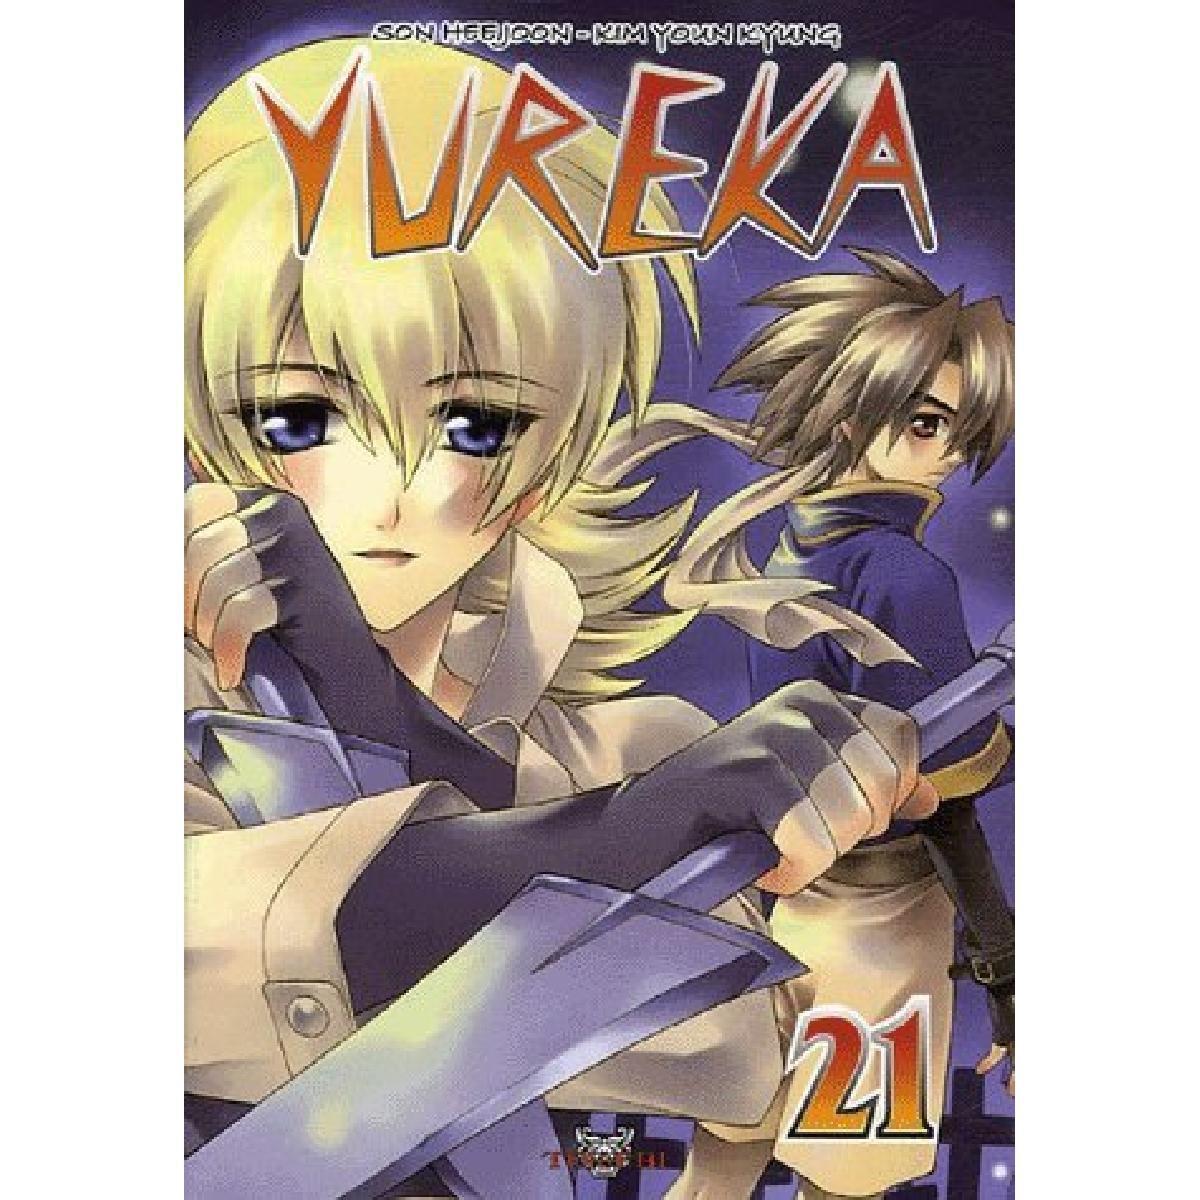 Manga Yureka Tome 21 - Editions Tokebi